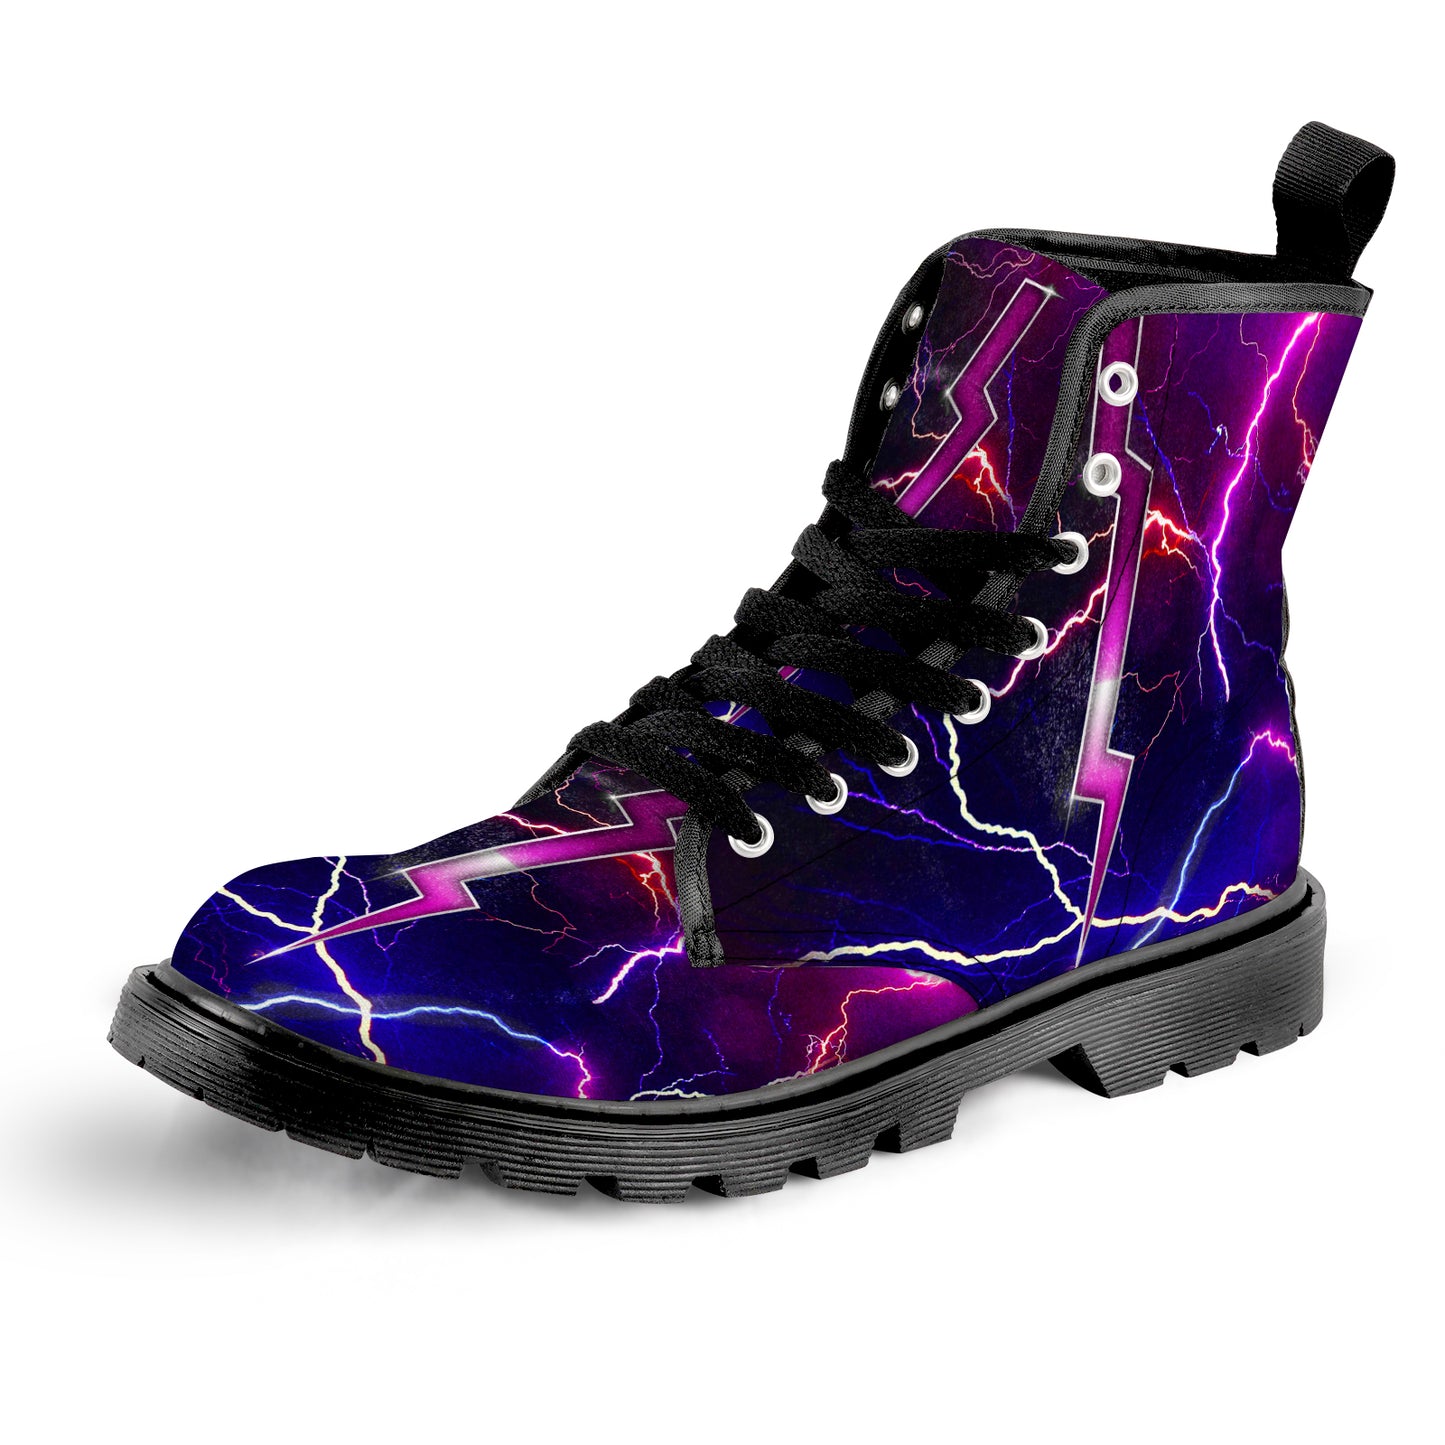 Men's Lace Up Canvas Boots - Purple Lightning